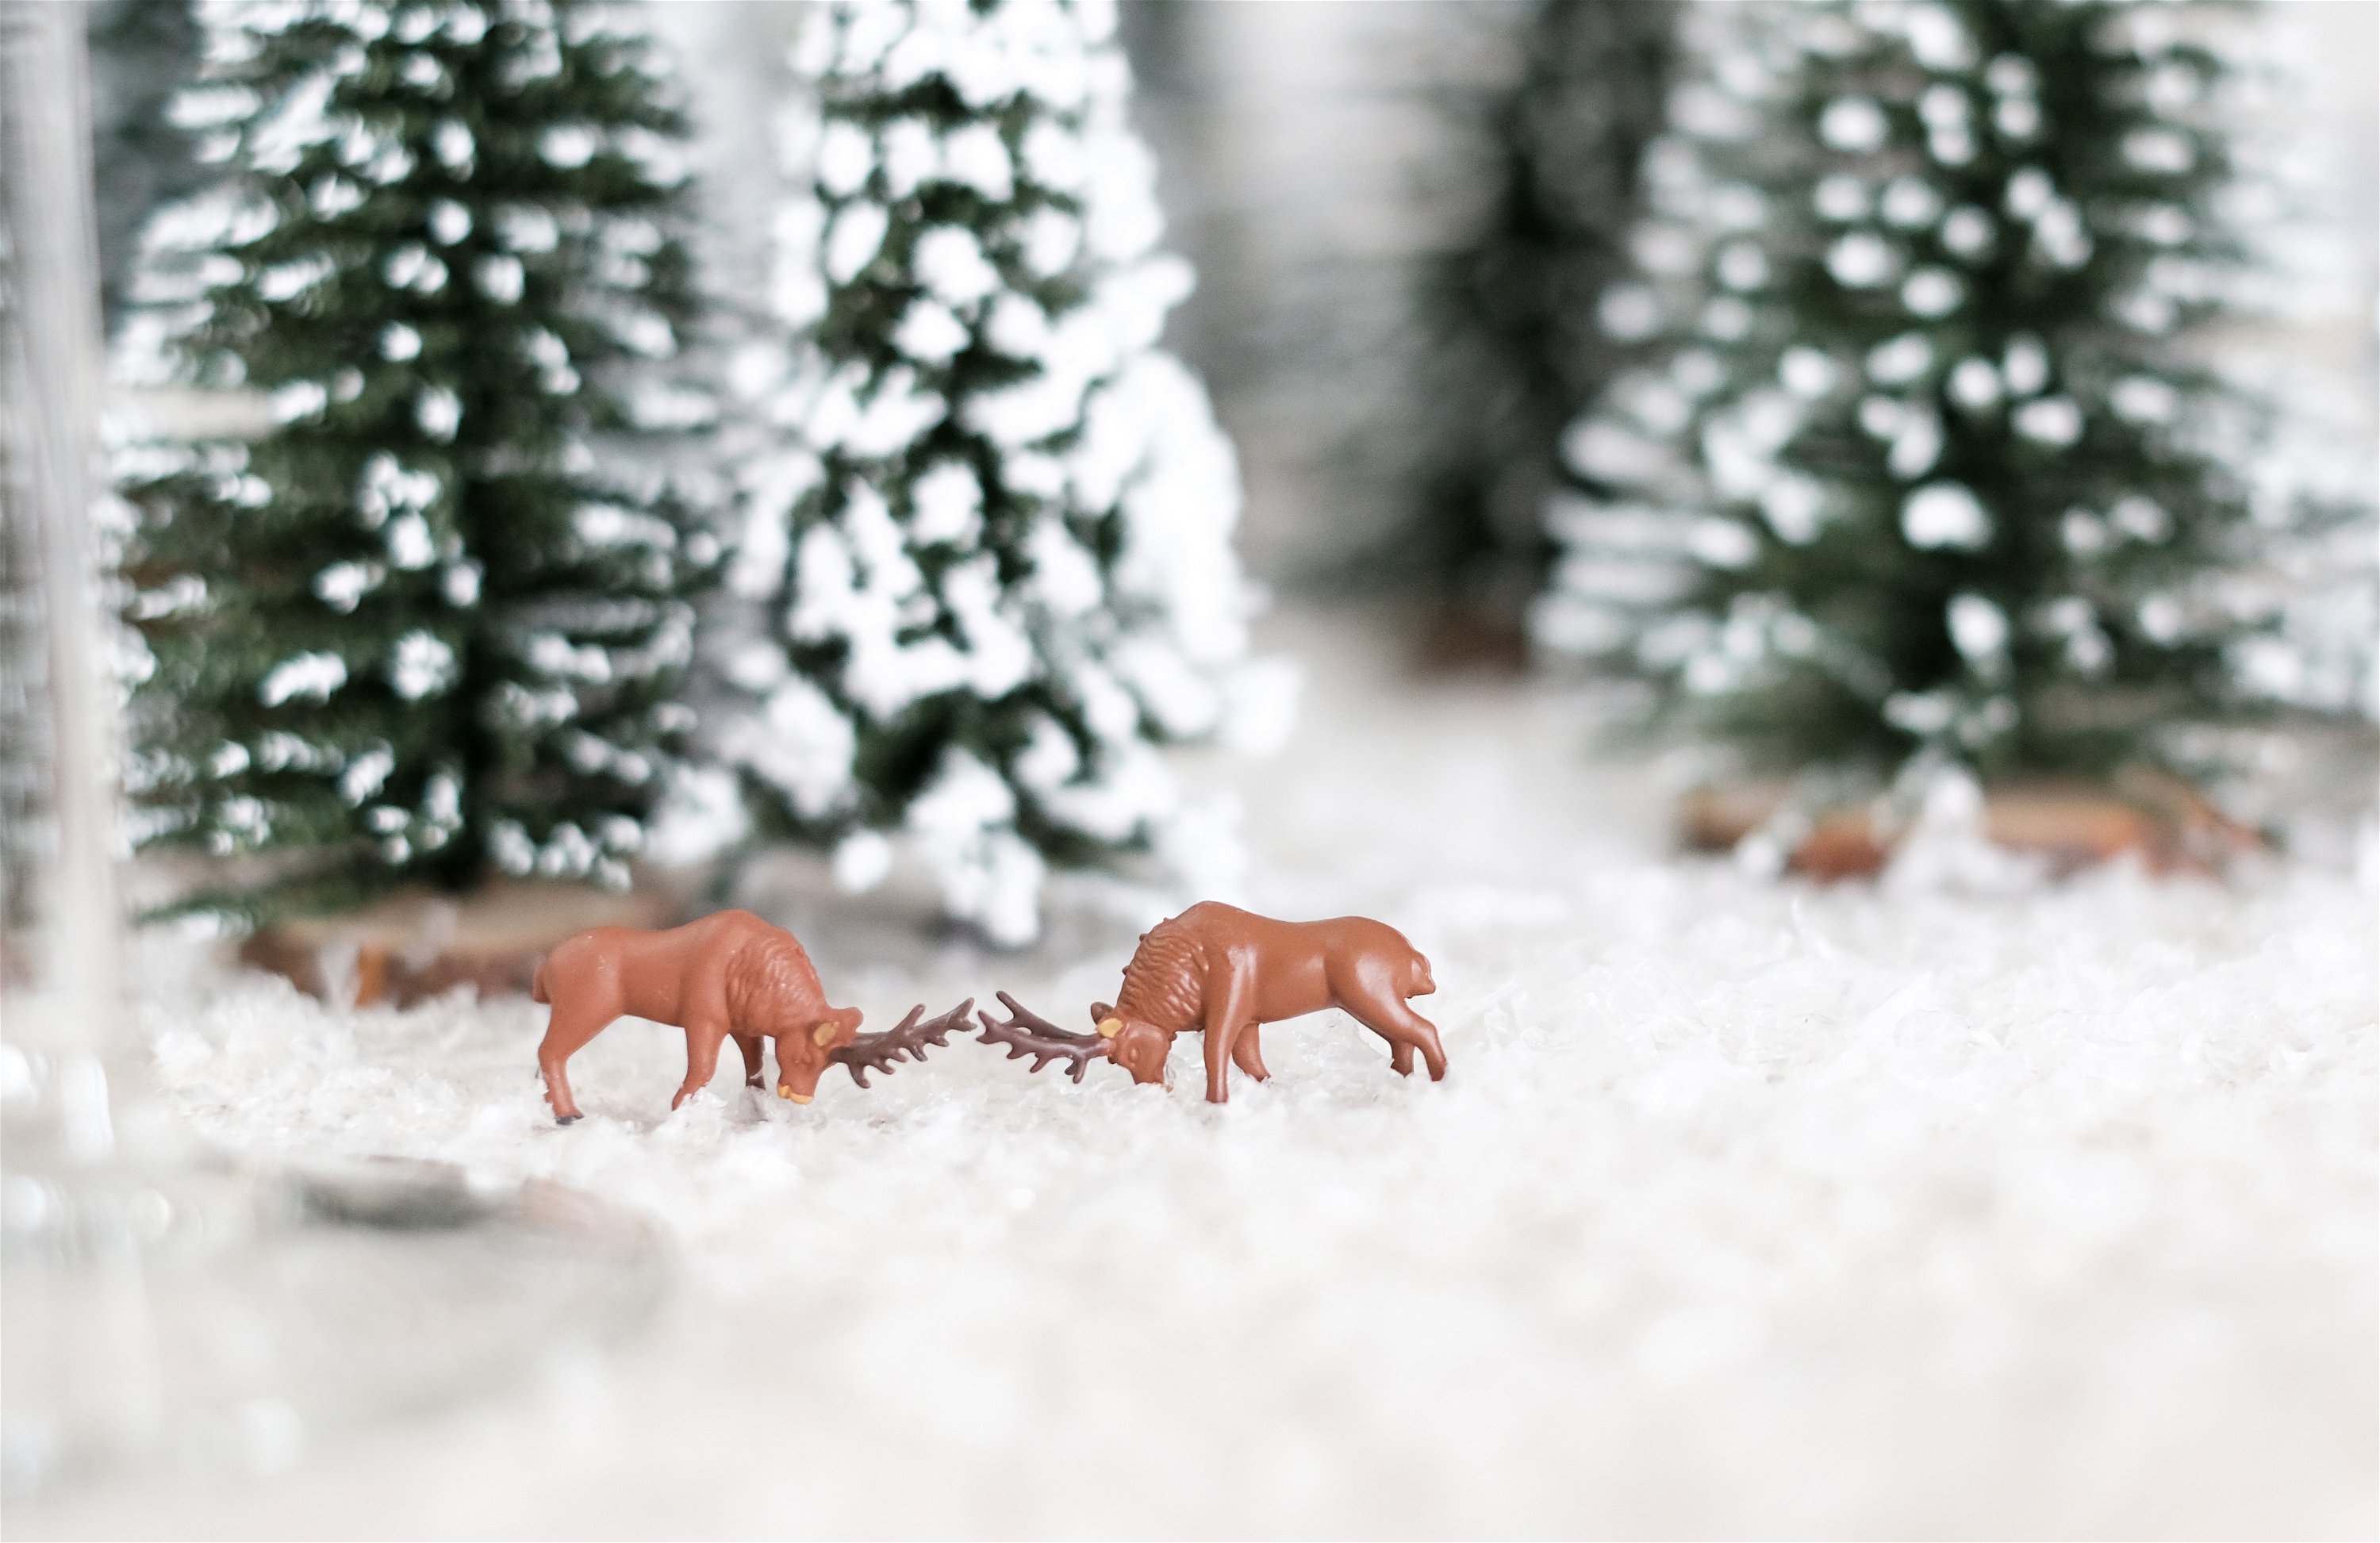 1. Snowy fir trees & name tags